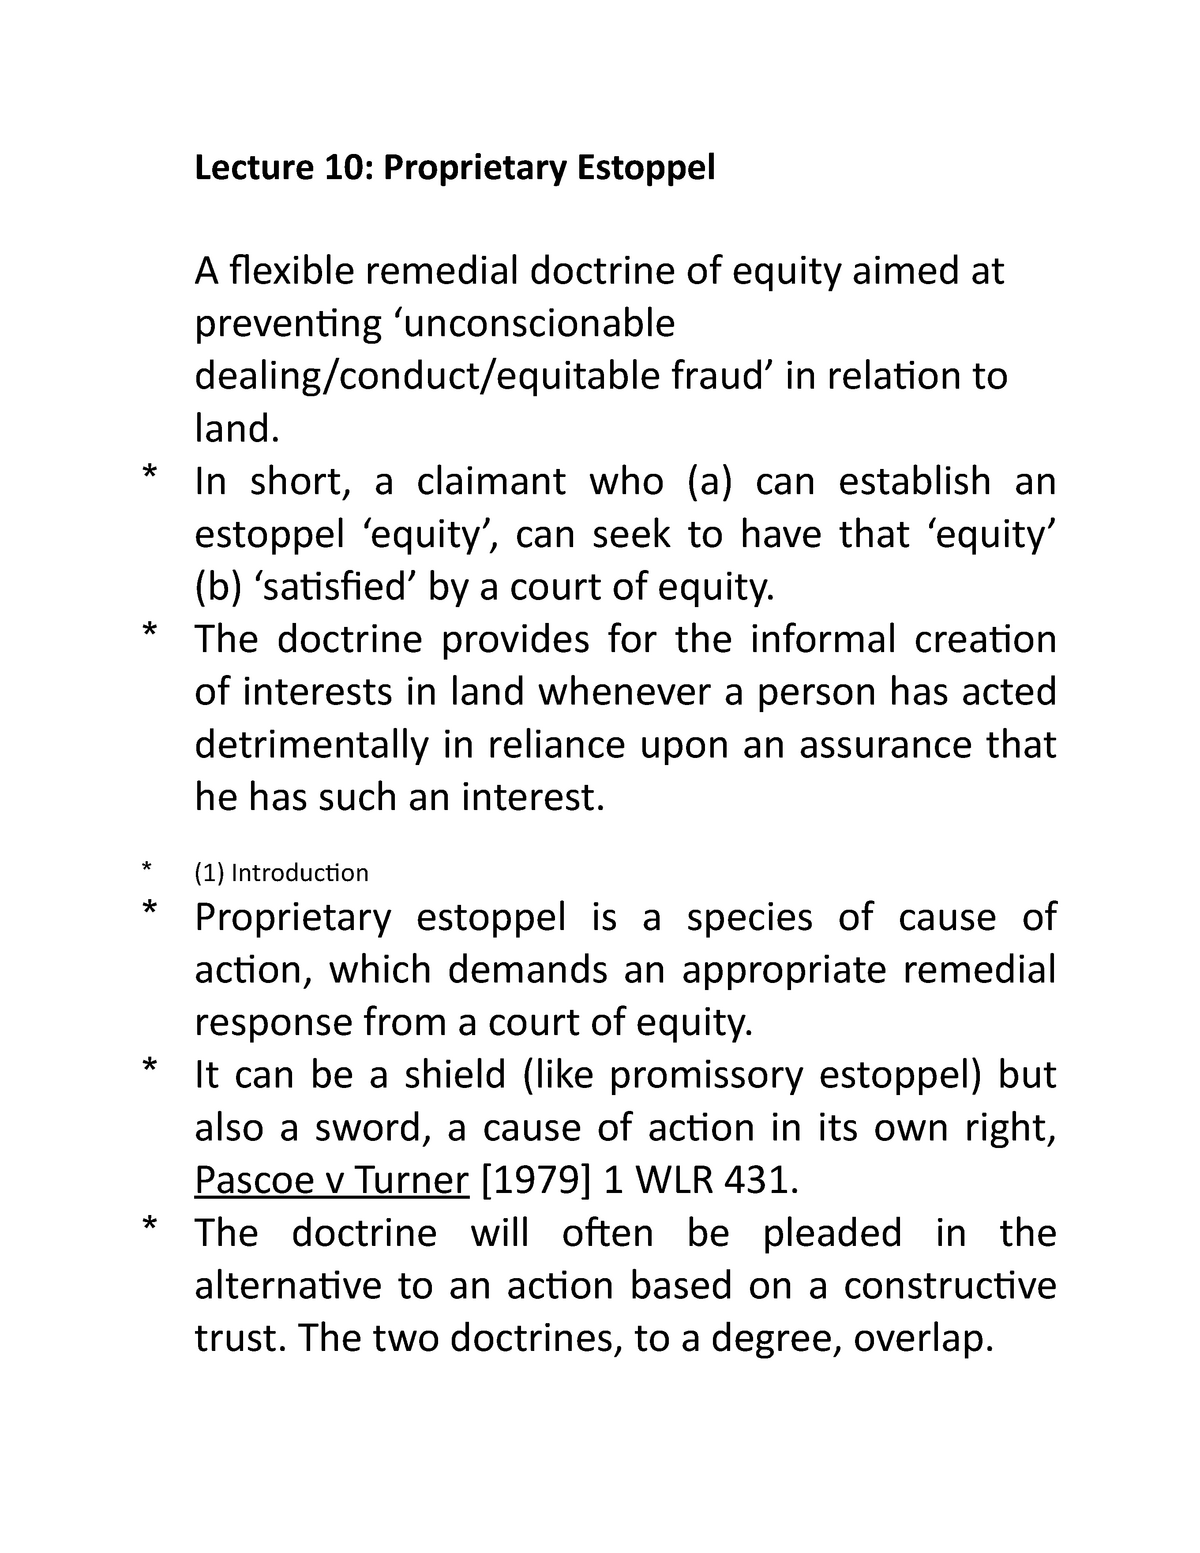 land law essay on proprietary estoppel